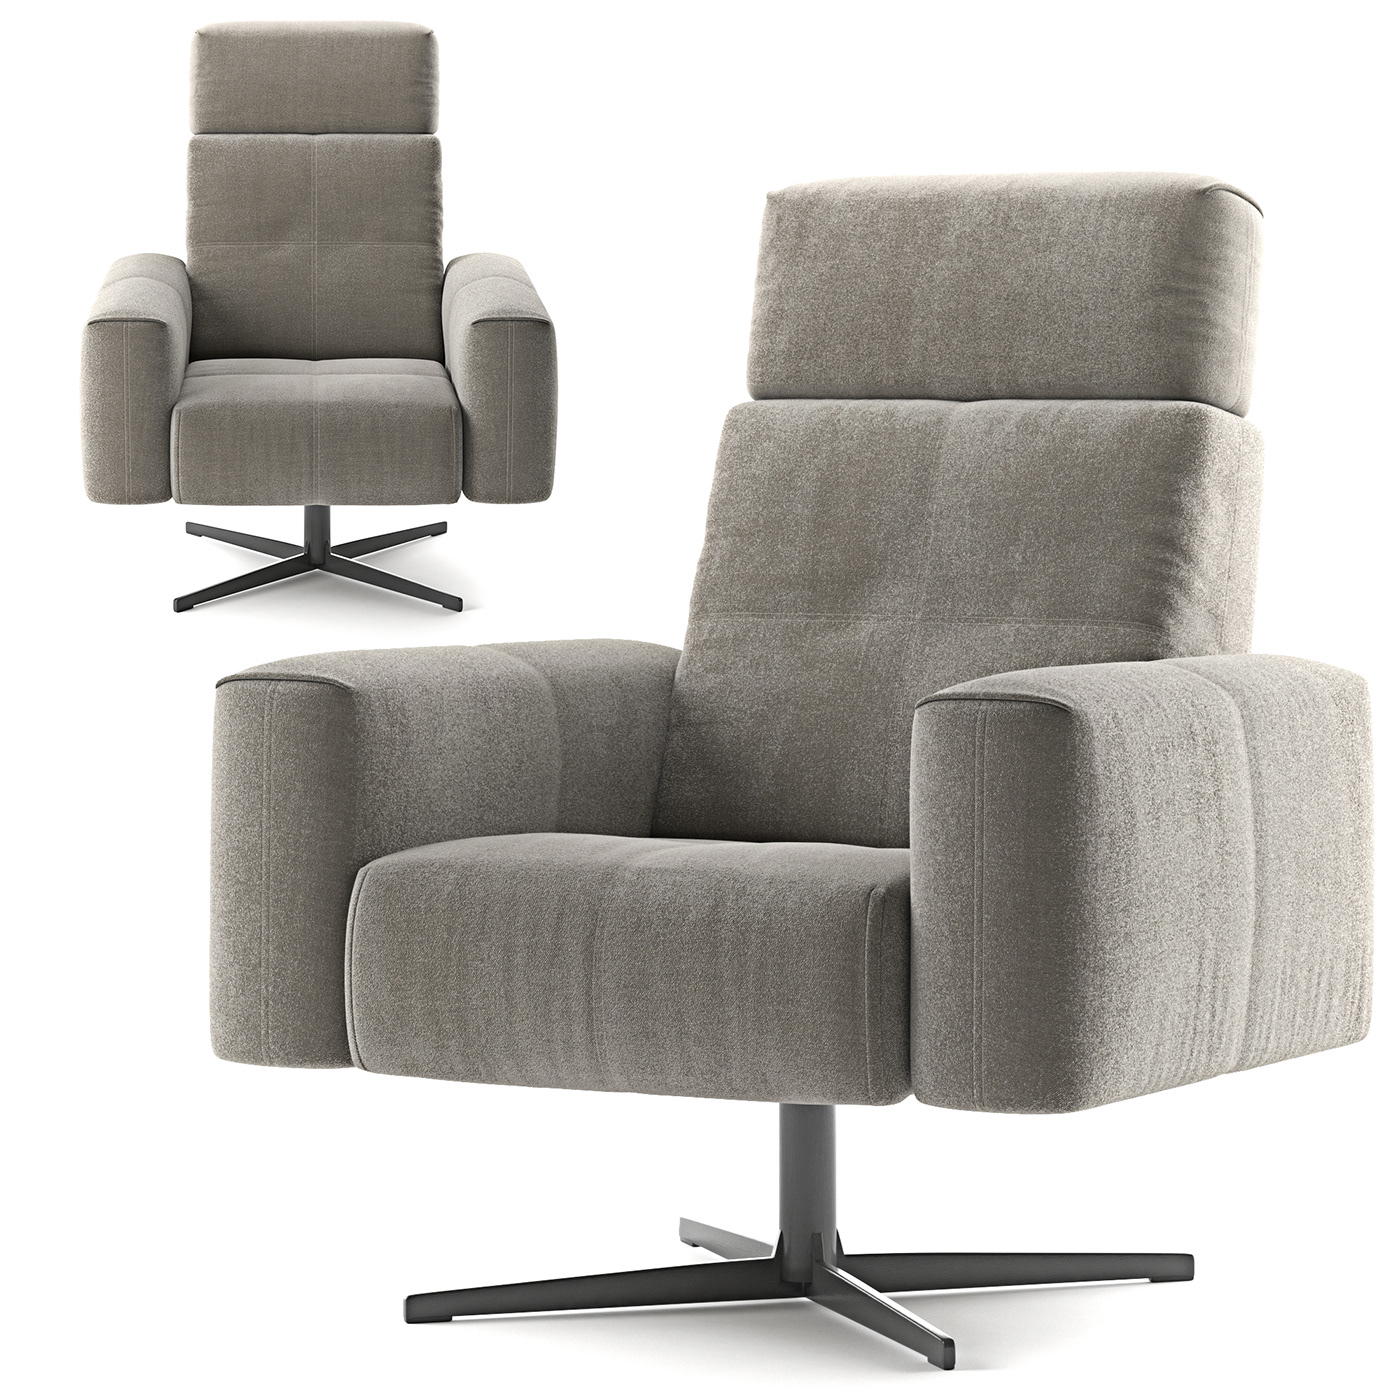 armchair 3dmodel chair Interior интерьер кресло 3Д модель 3dsmax Render corona